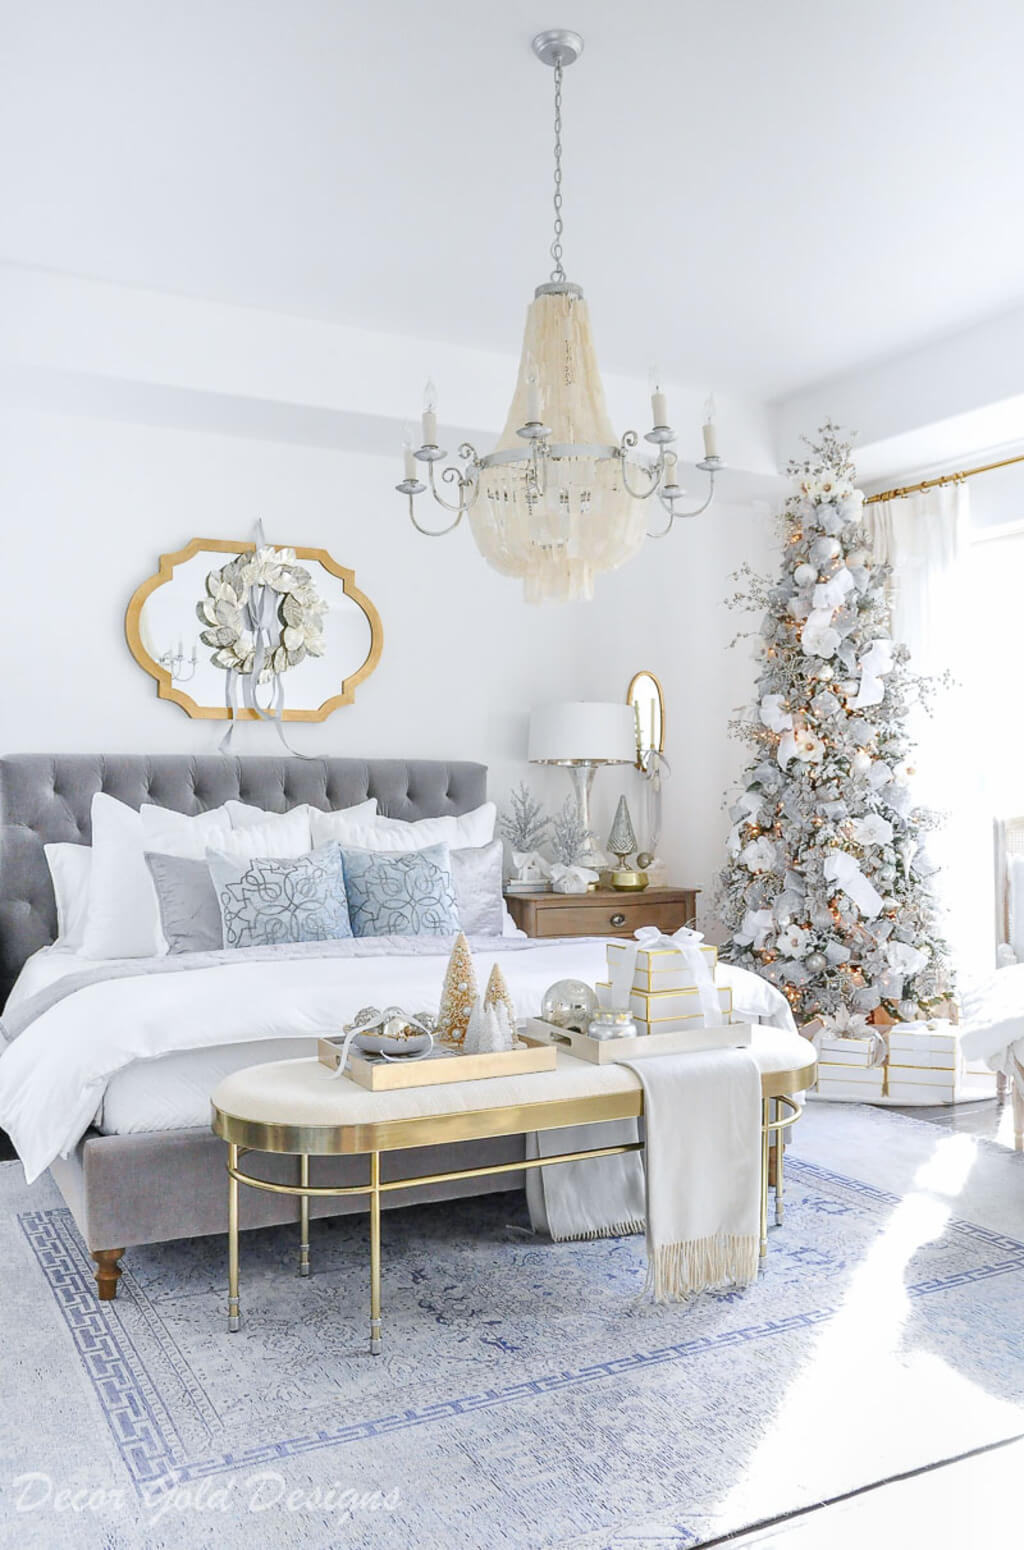 Tinsel-adorned bedroom decor